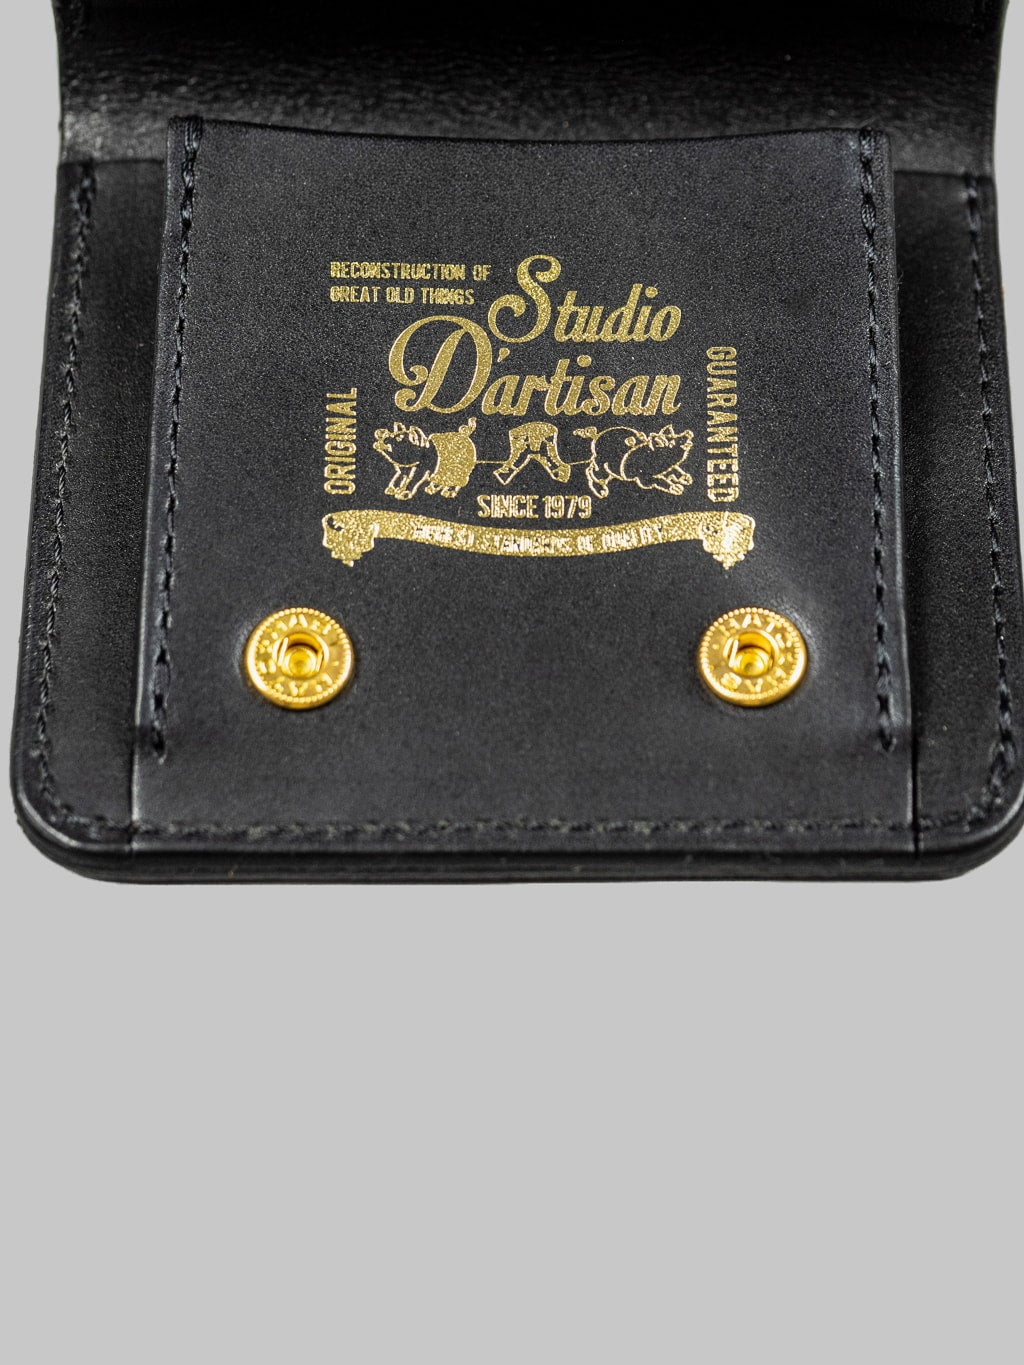 Studio Dartisan black leather mini wallet hand stamped logo